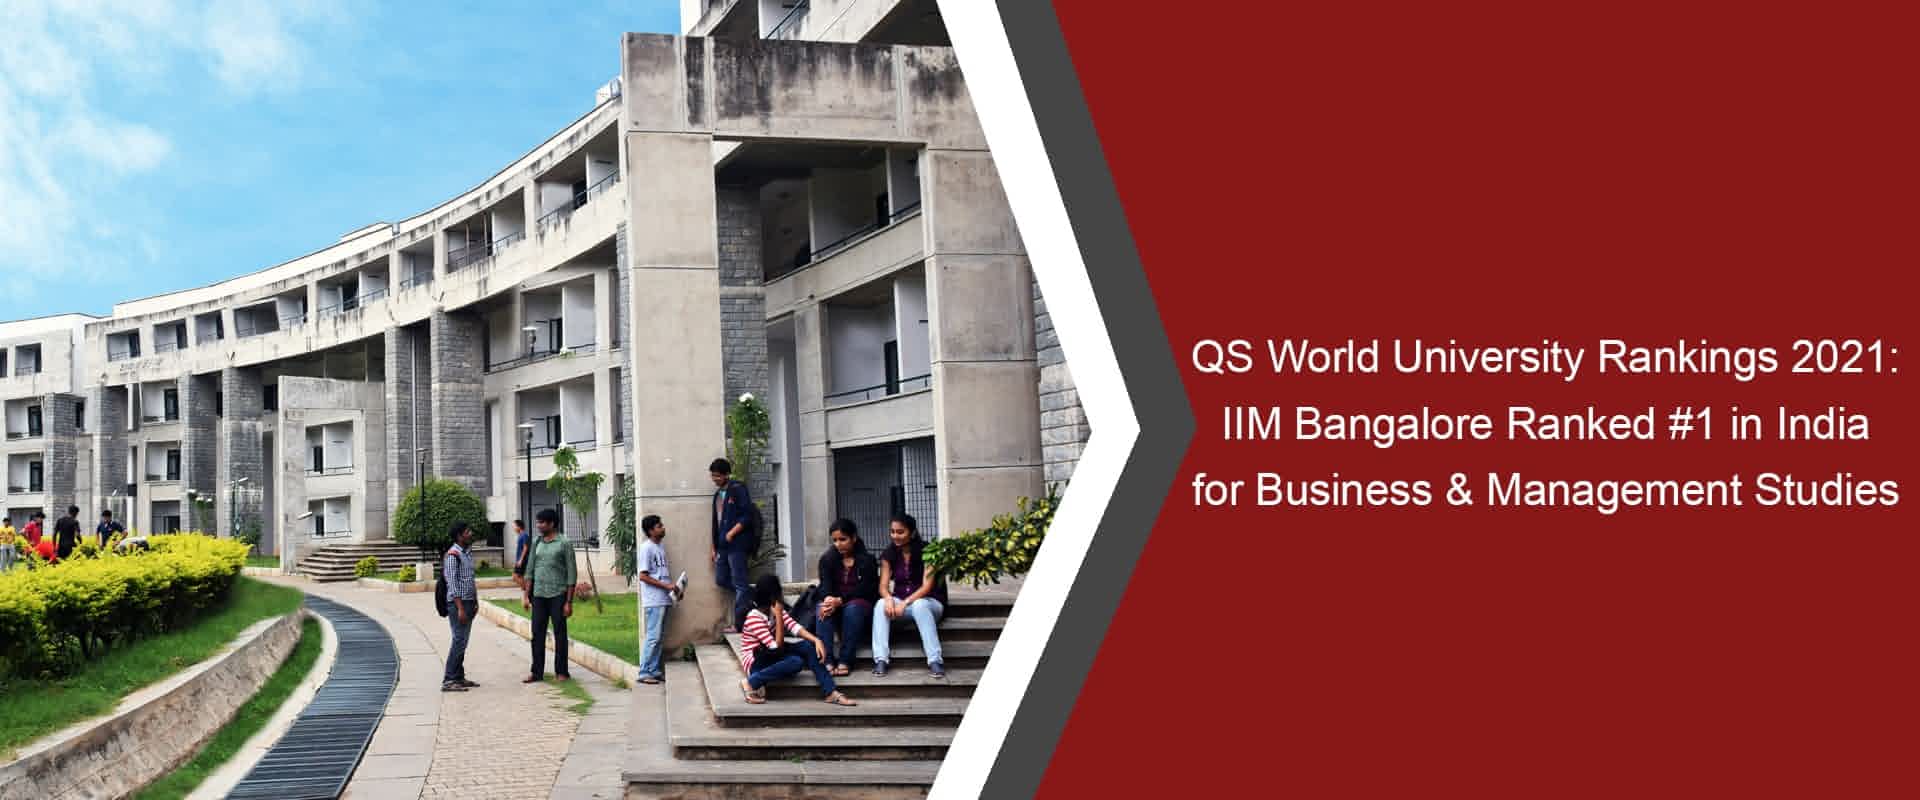 QS World University Rankings 2021: IIM Bangalore Ranked #1 in India for Business & Management Studies